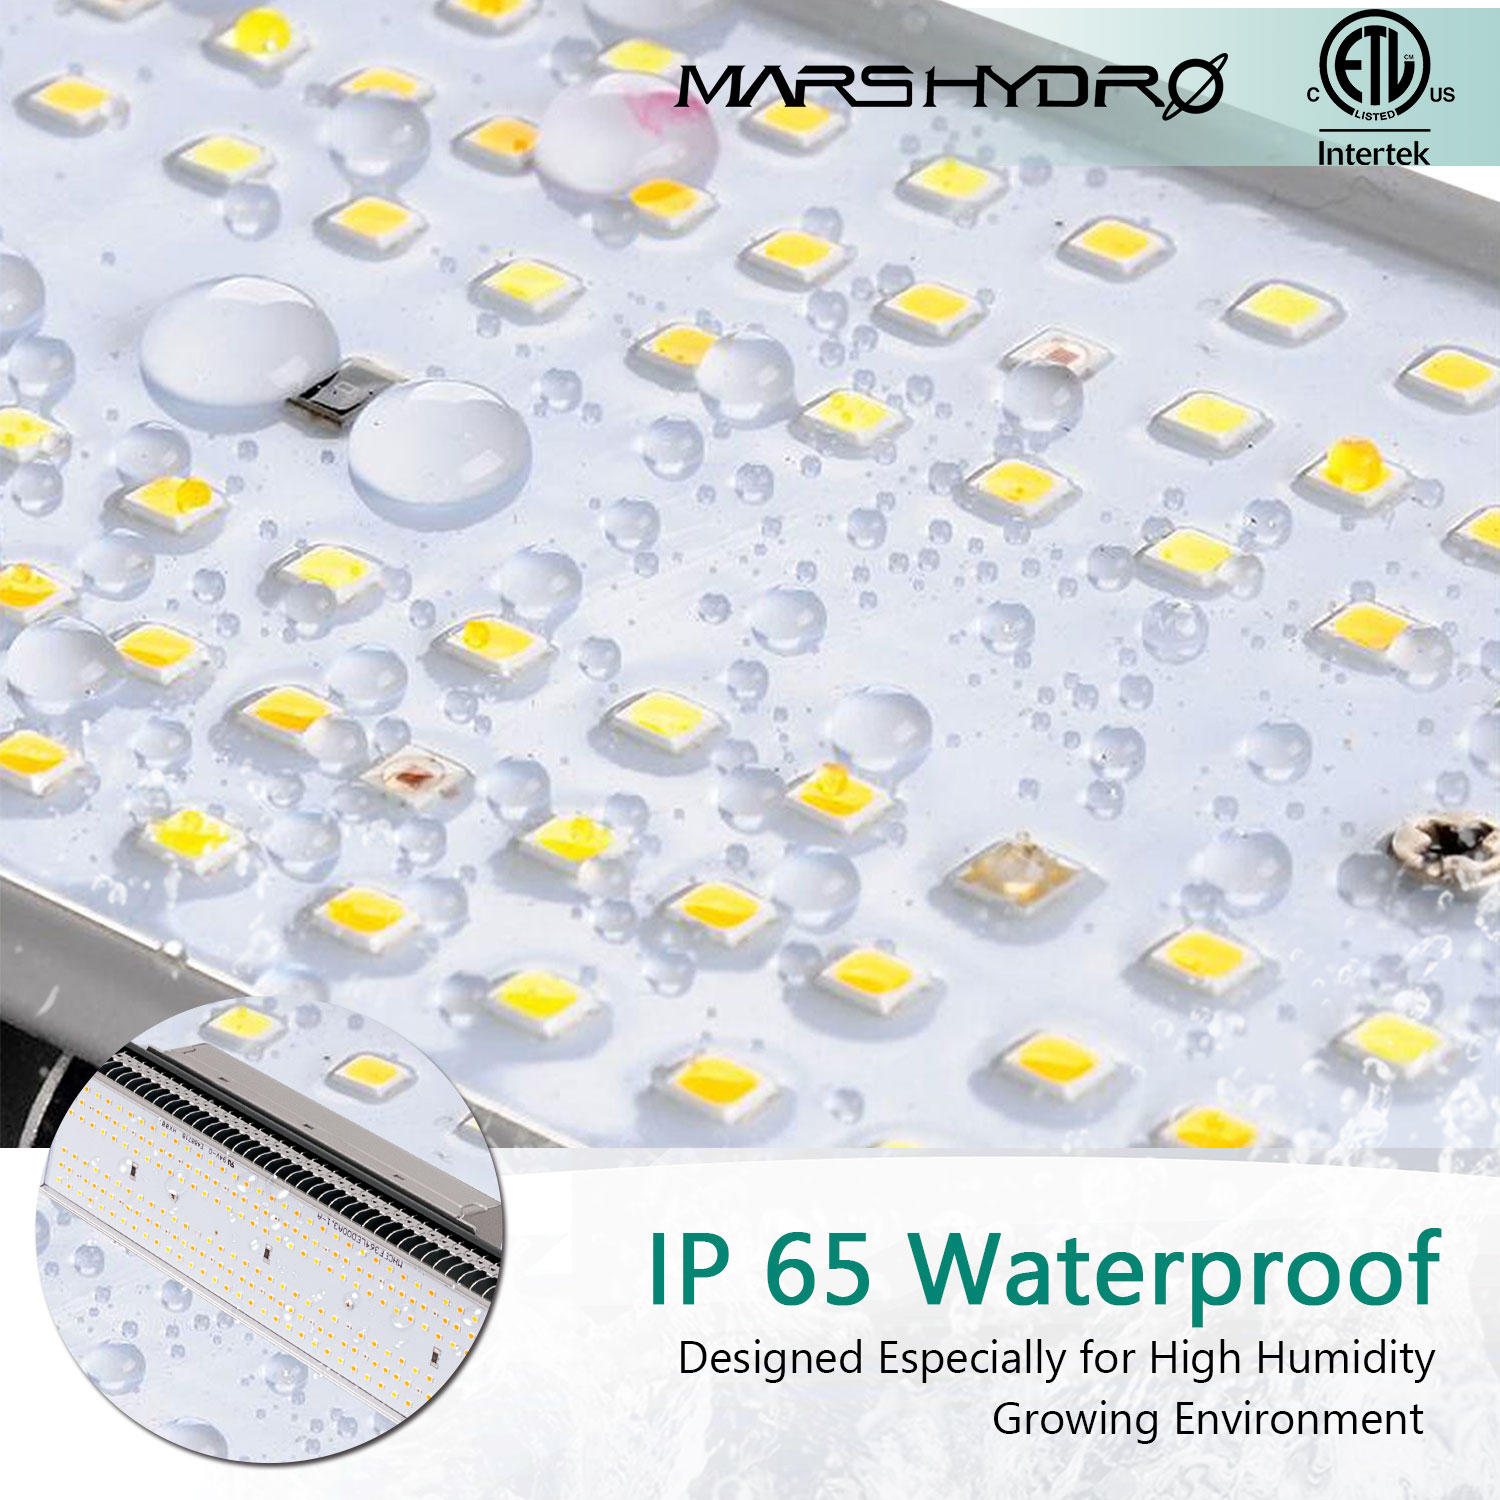 Mars Hydro SP 250 led grow light waterproof 6